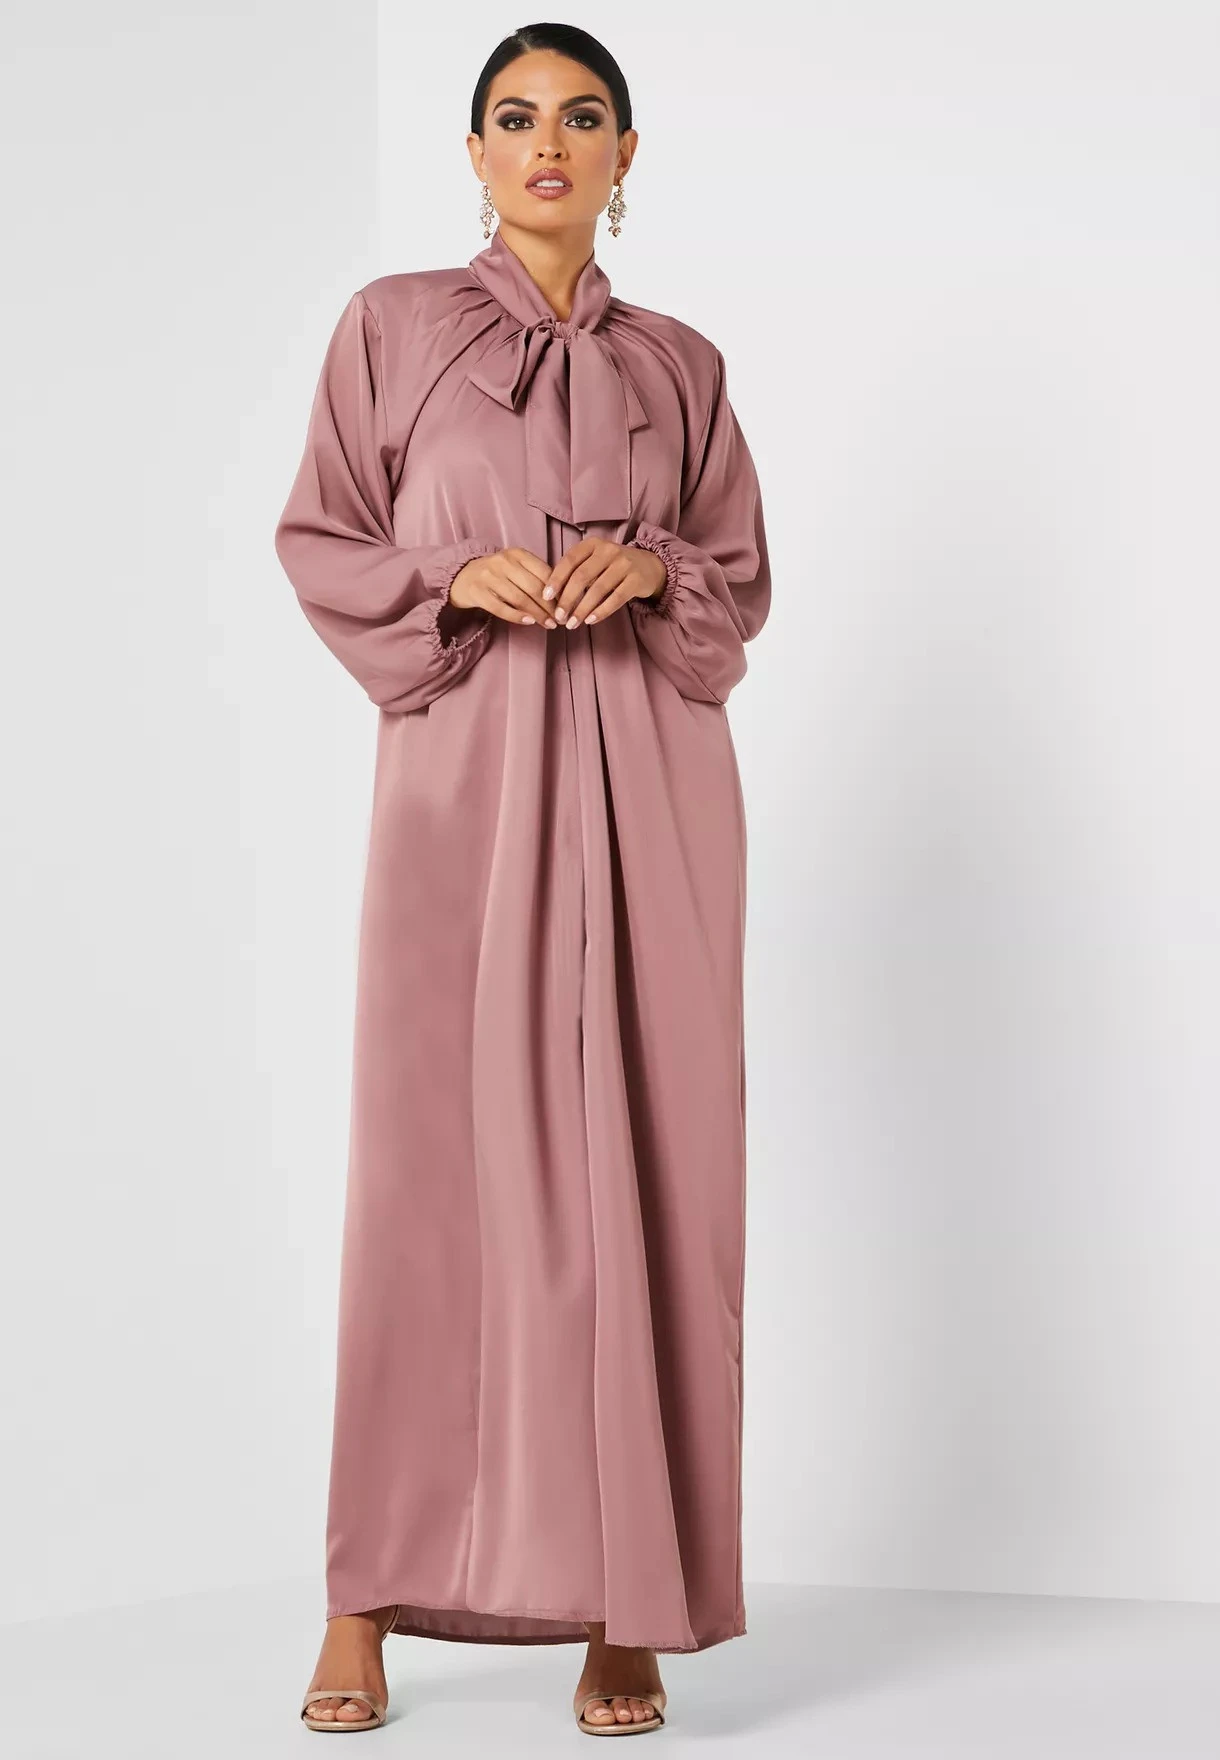 Oem Custom Islamic Dubai High Fashion Plus Size Bow Tie Collar Long Sleeves Plain Abaya Dress For Muslim Women